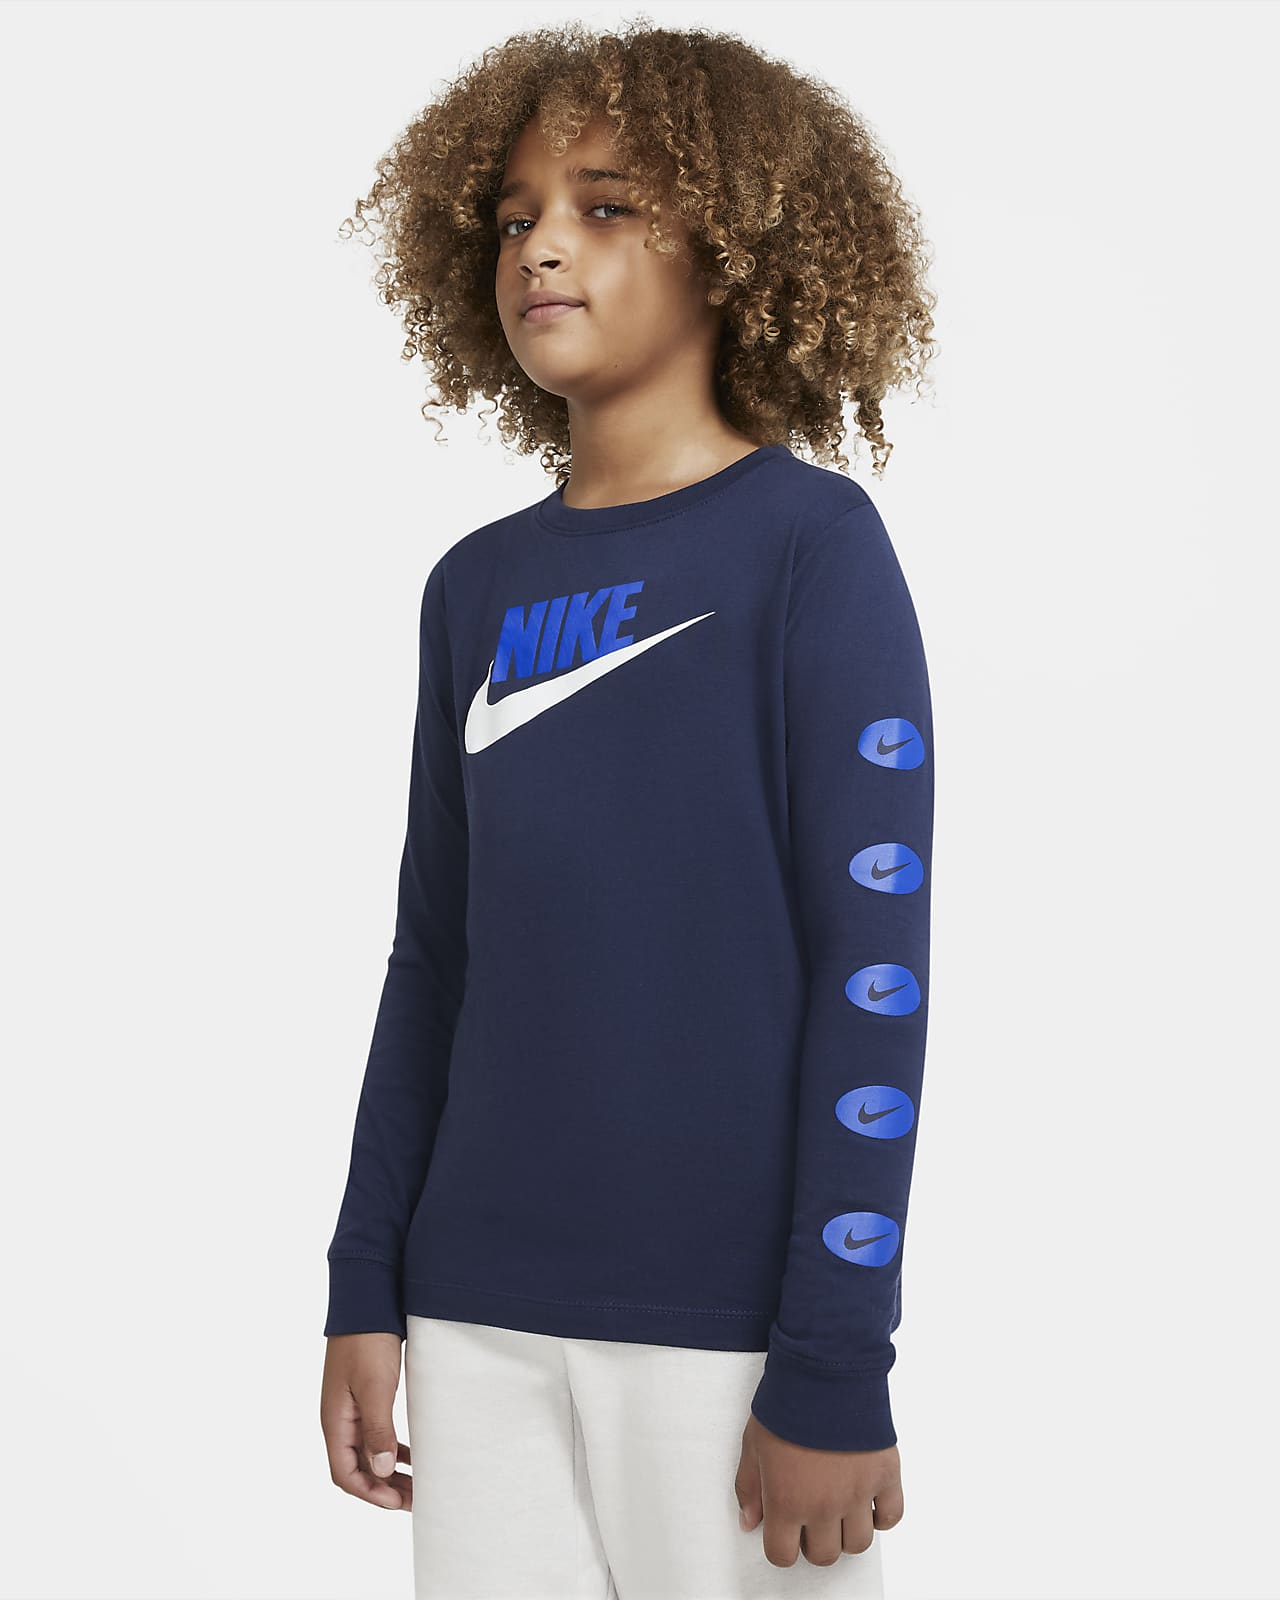 Nike Sportswear Kids' (Boys') Long-Sleeve T-Shirt. Nike.com